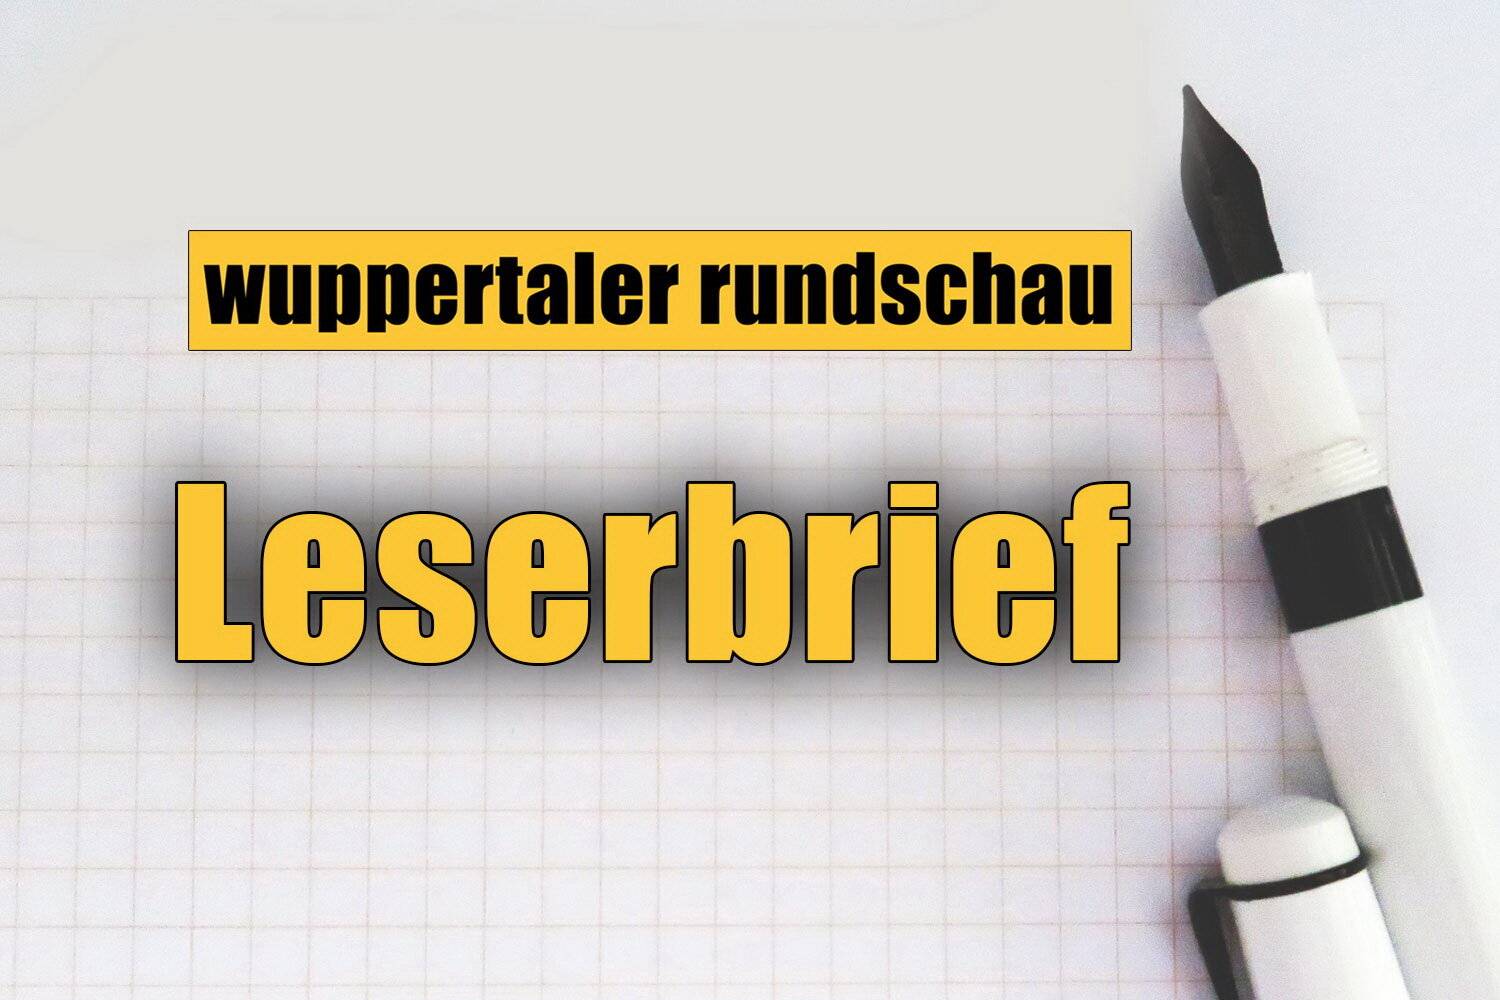 Leserbrief an die Wuppertaler Rundschau: redaktion@wuppertaler-rundschau.de